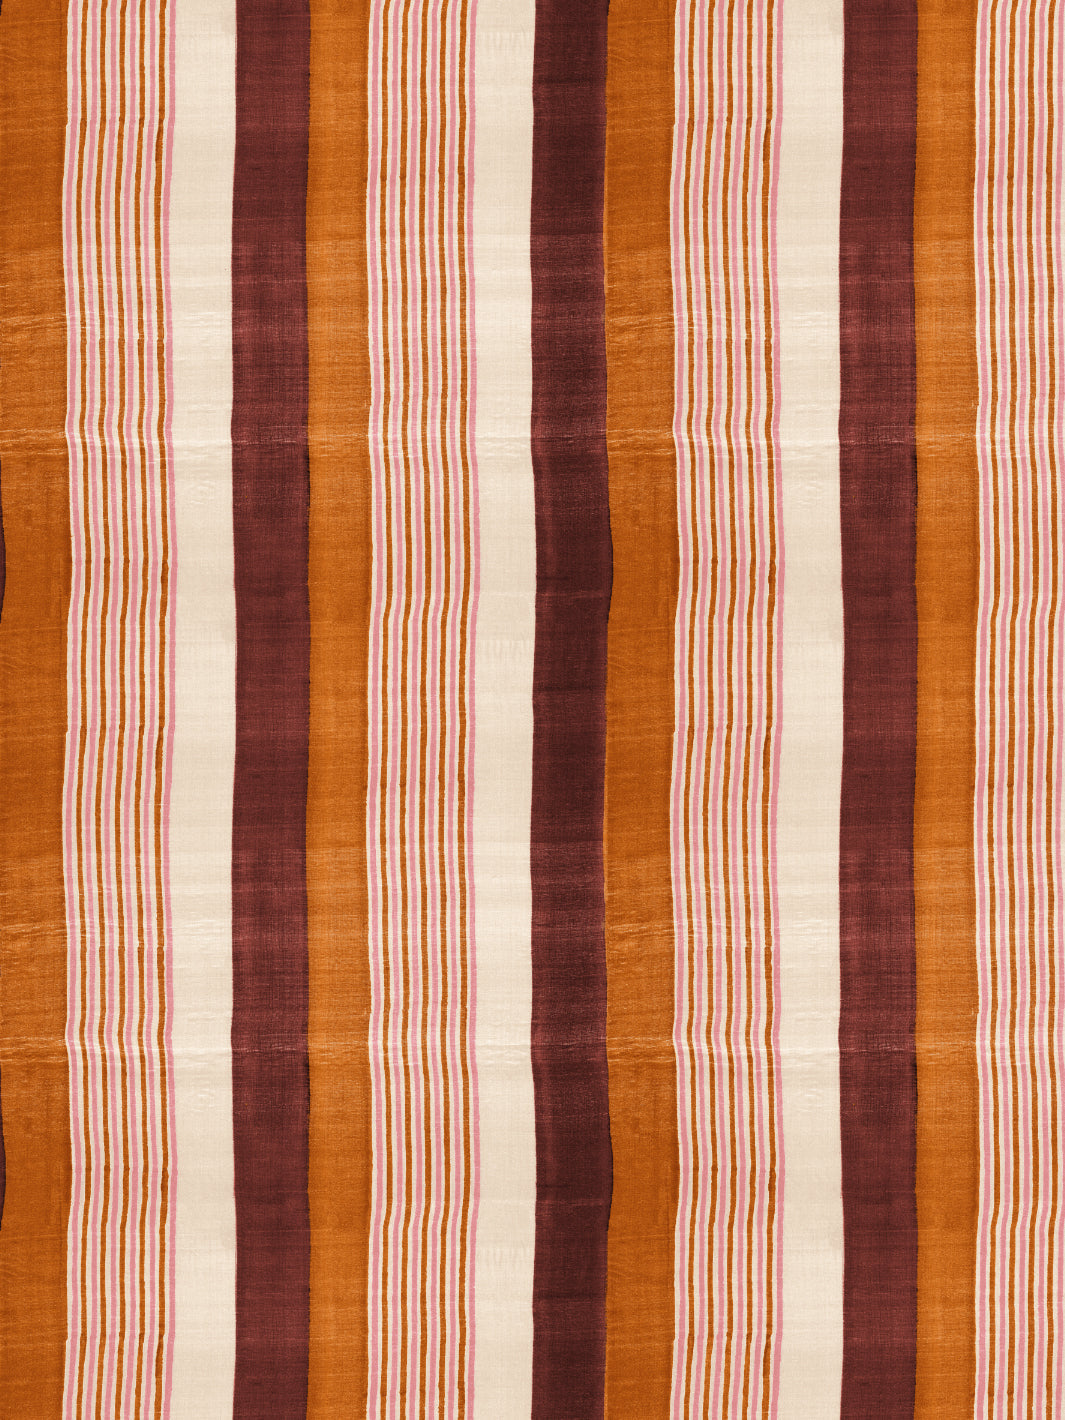 'Tent Stripe Small' Wallpaper by Chris Benz - Rust Terracotta Pink